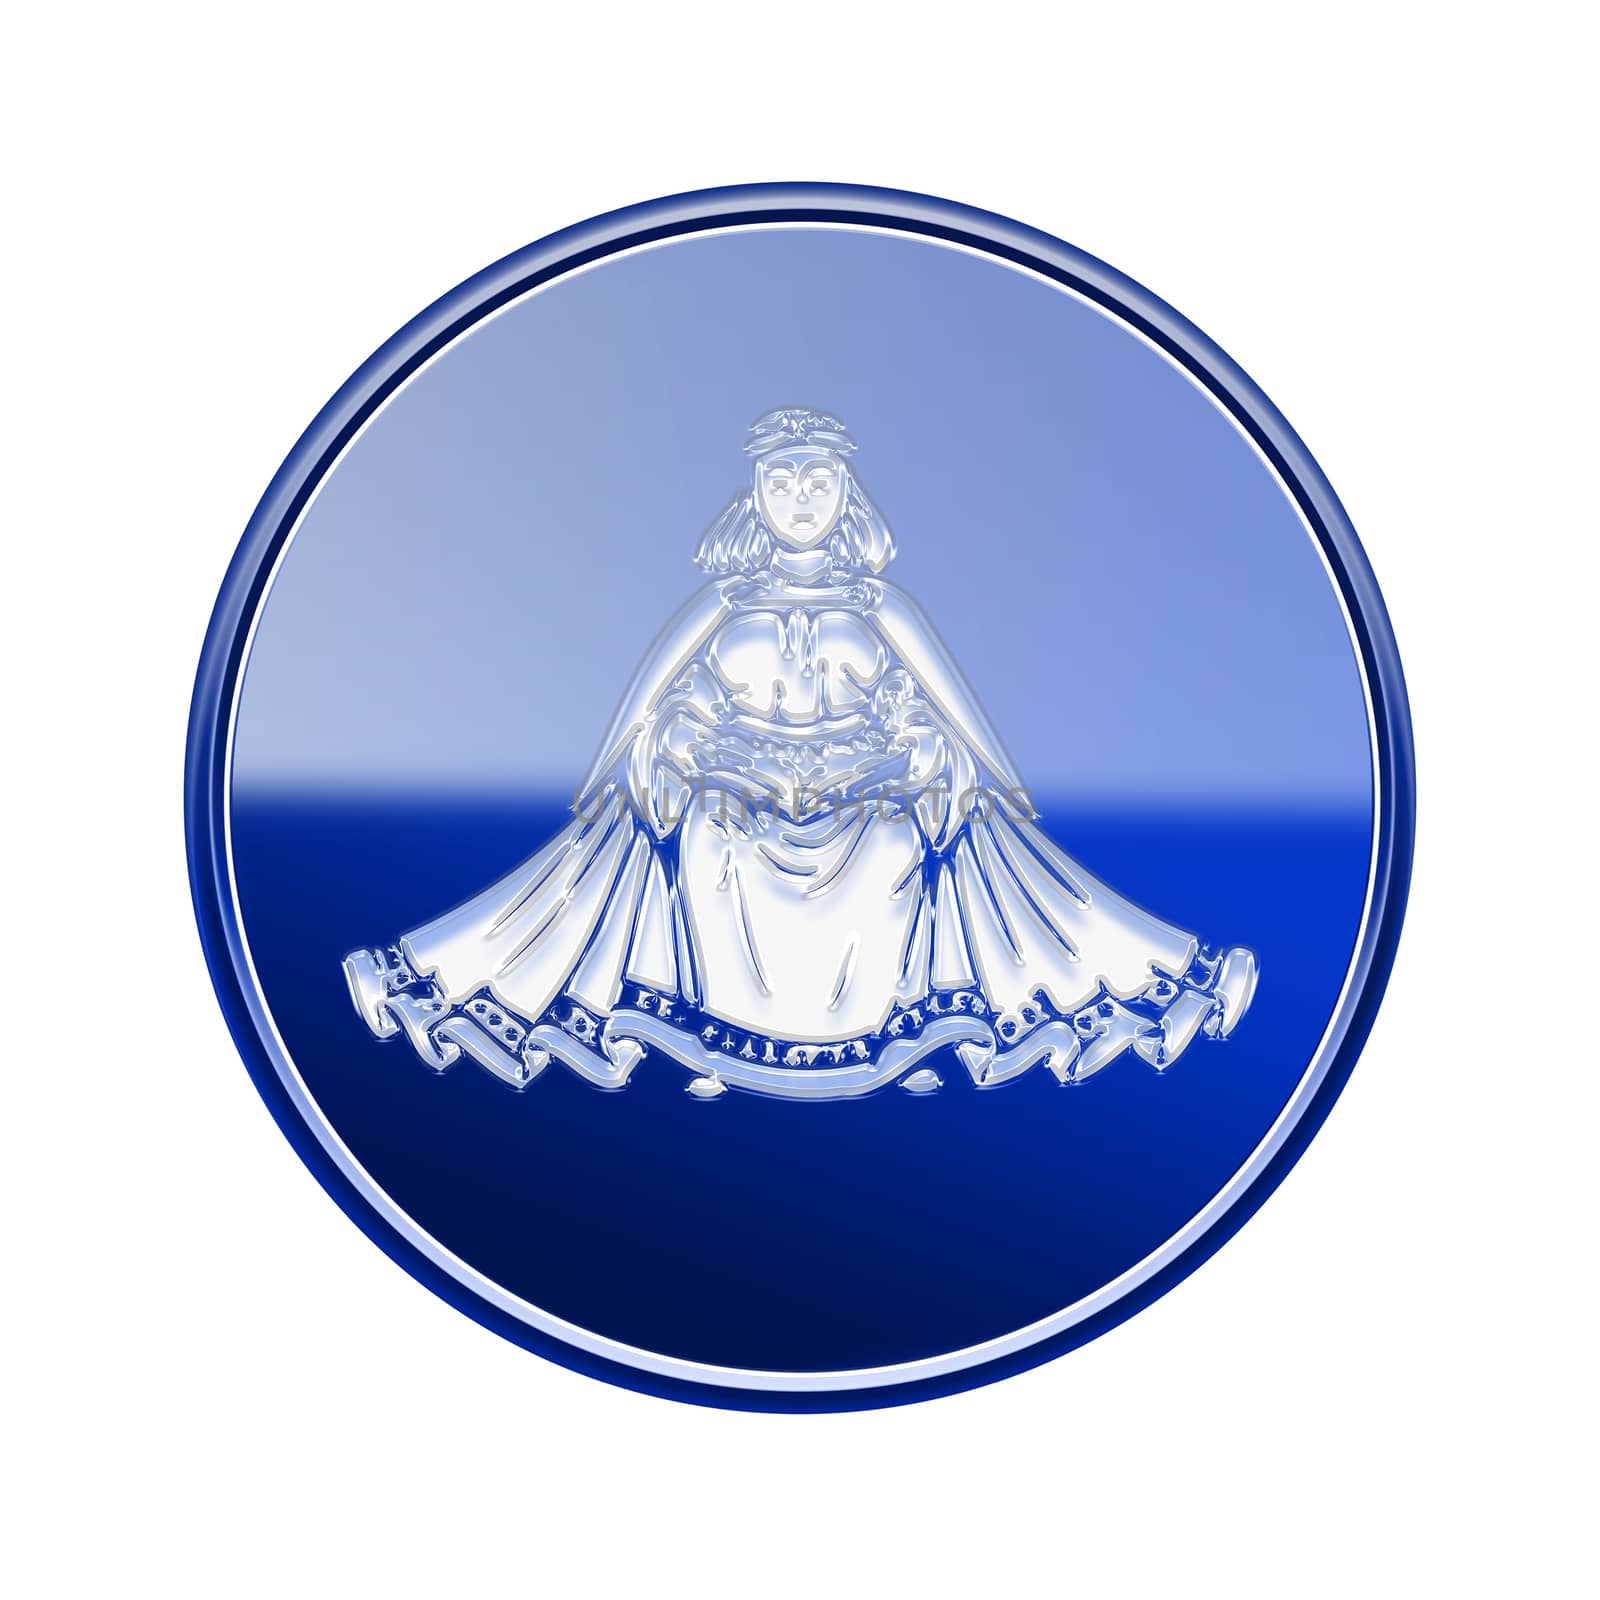 Virgo zodiac icon blue, isolated on white background by zeffss